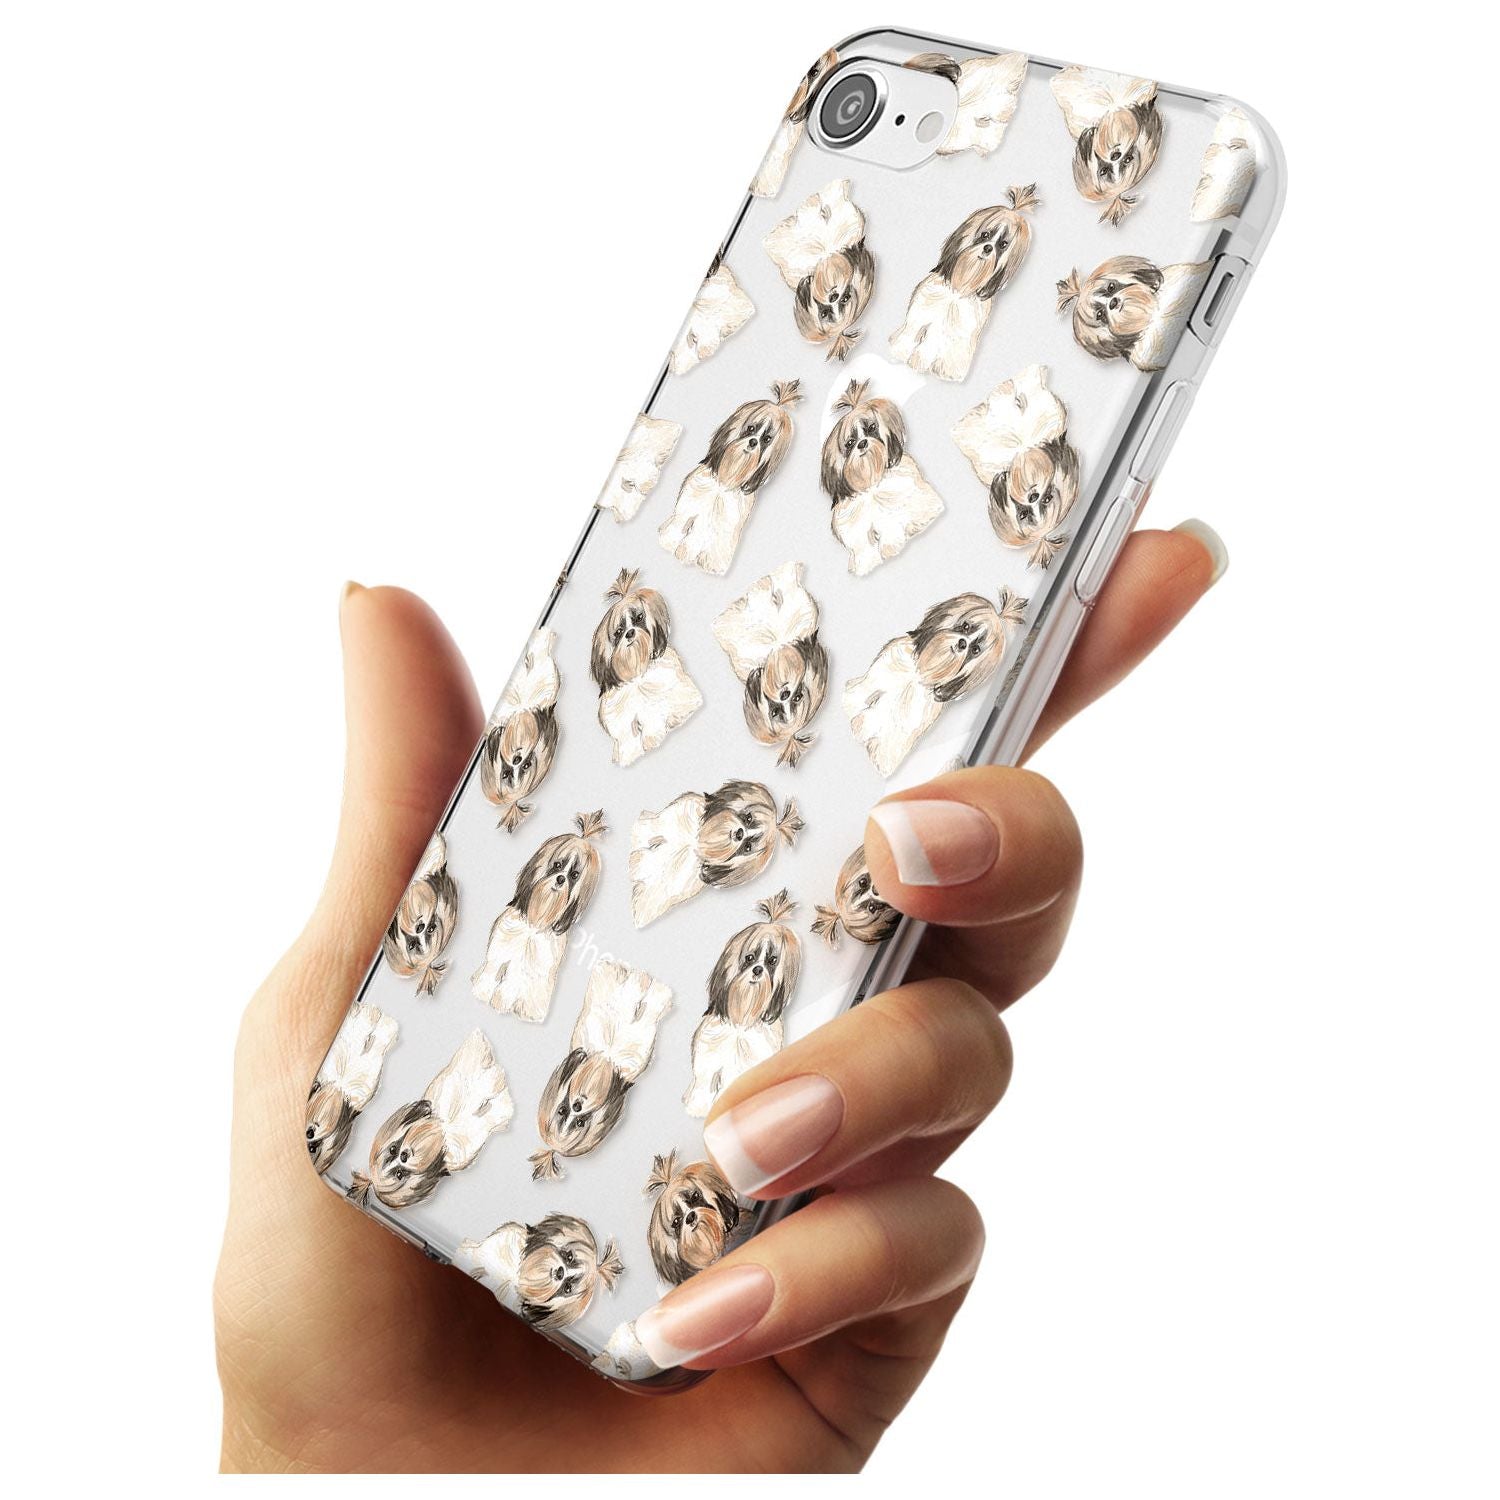 Shih tzu (Long Hair) Watercolour Dog Pattern Slim TPU Phone Case for iPhone SE 8 7 Plus